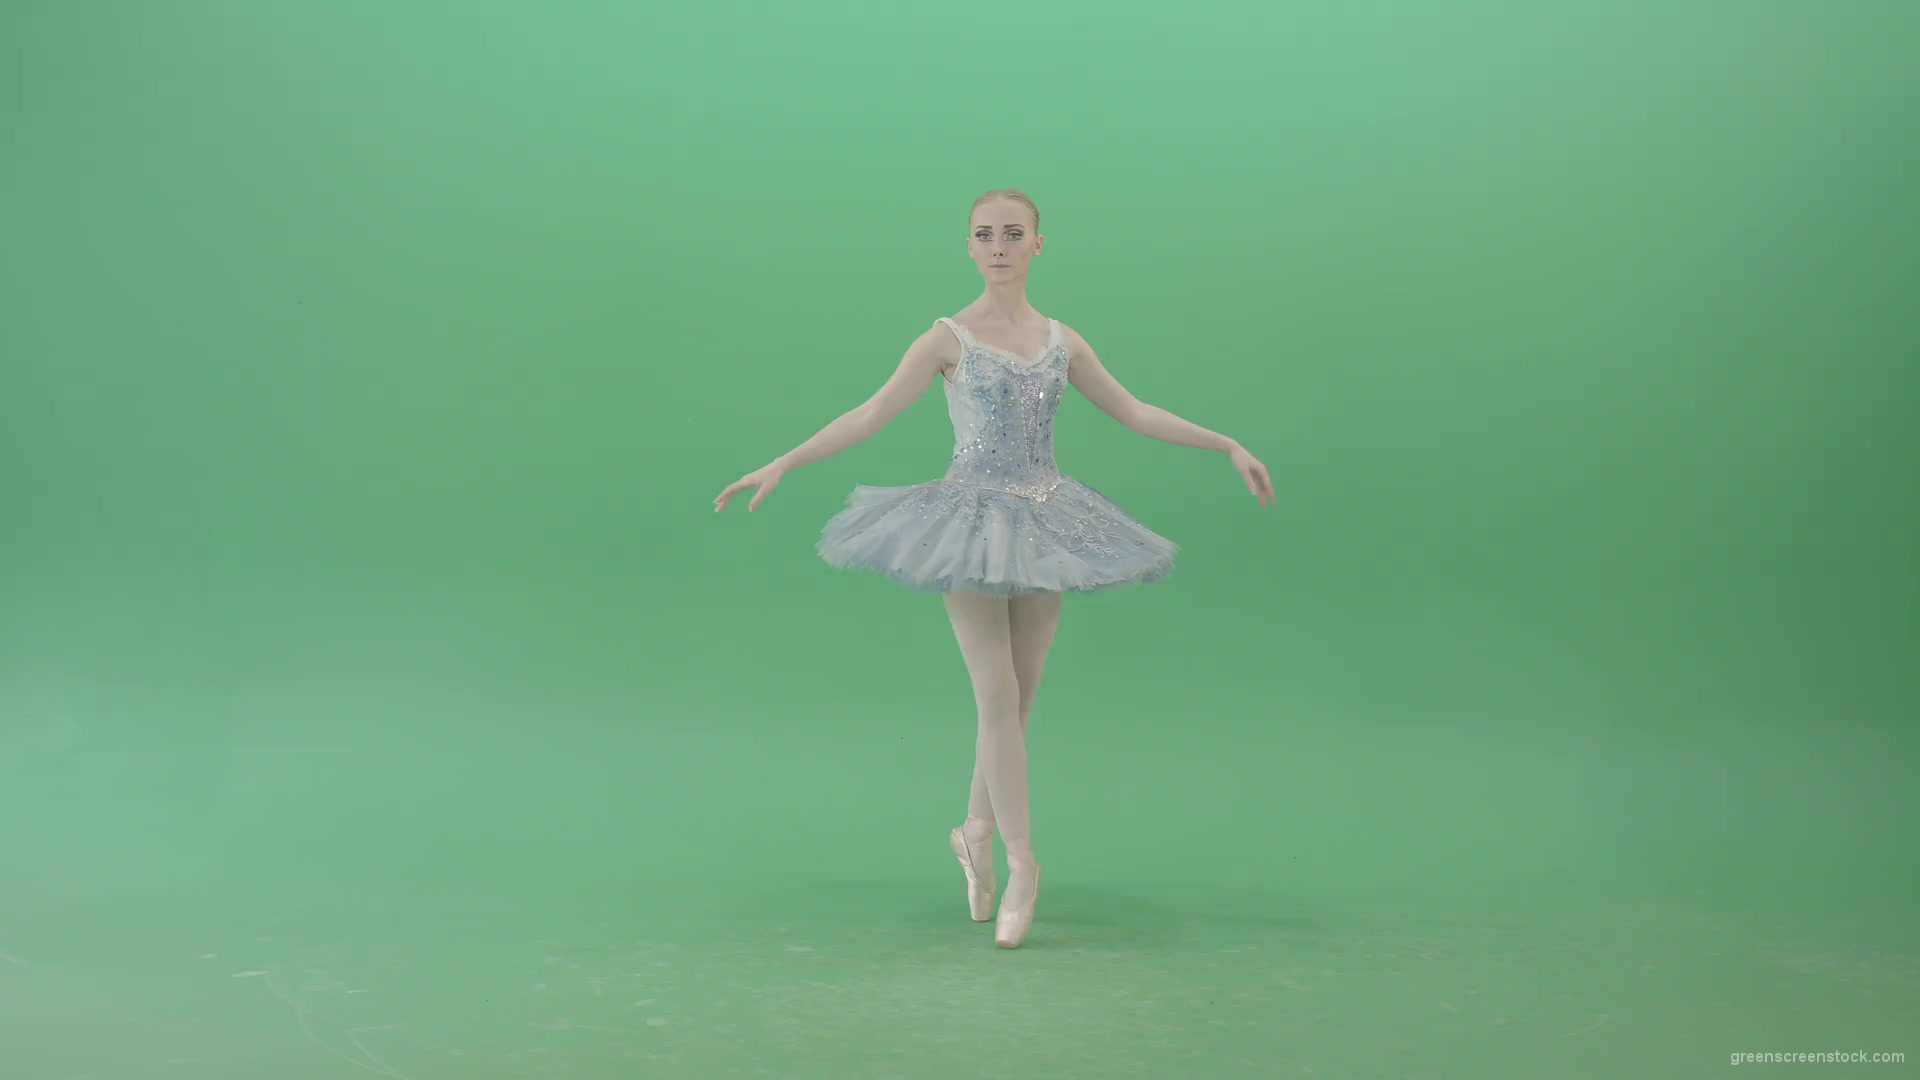 Beauty-blonde-ballerin-ballet-dancing-girl-in-blue-dress-spinning-over-green-screen-4K-Video-Footag-30fps-1920_001 Green Screen Stock